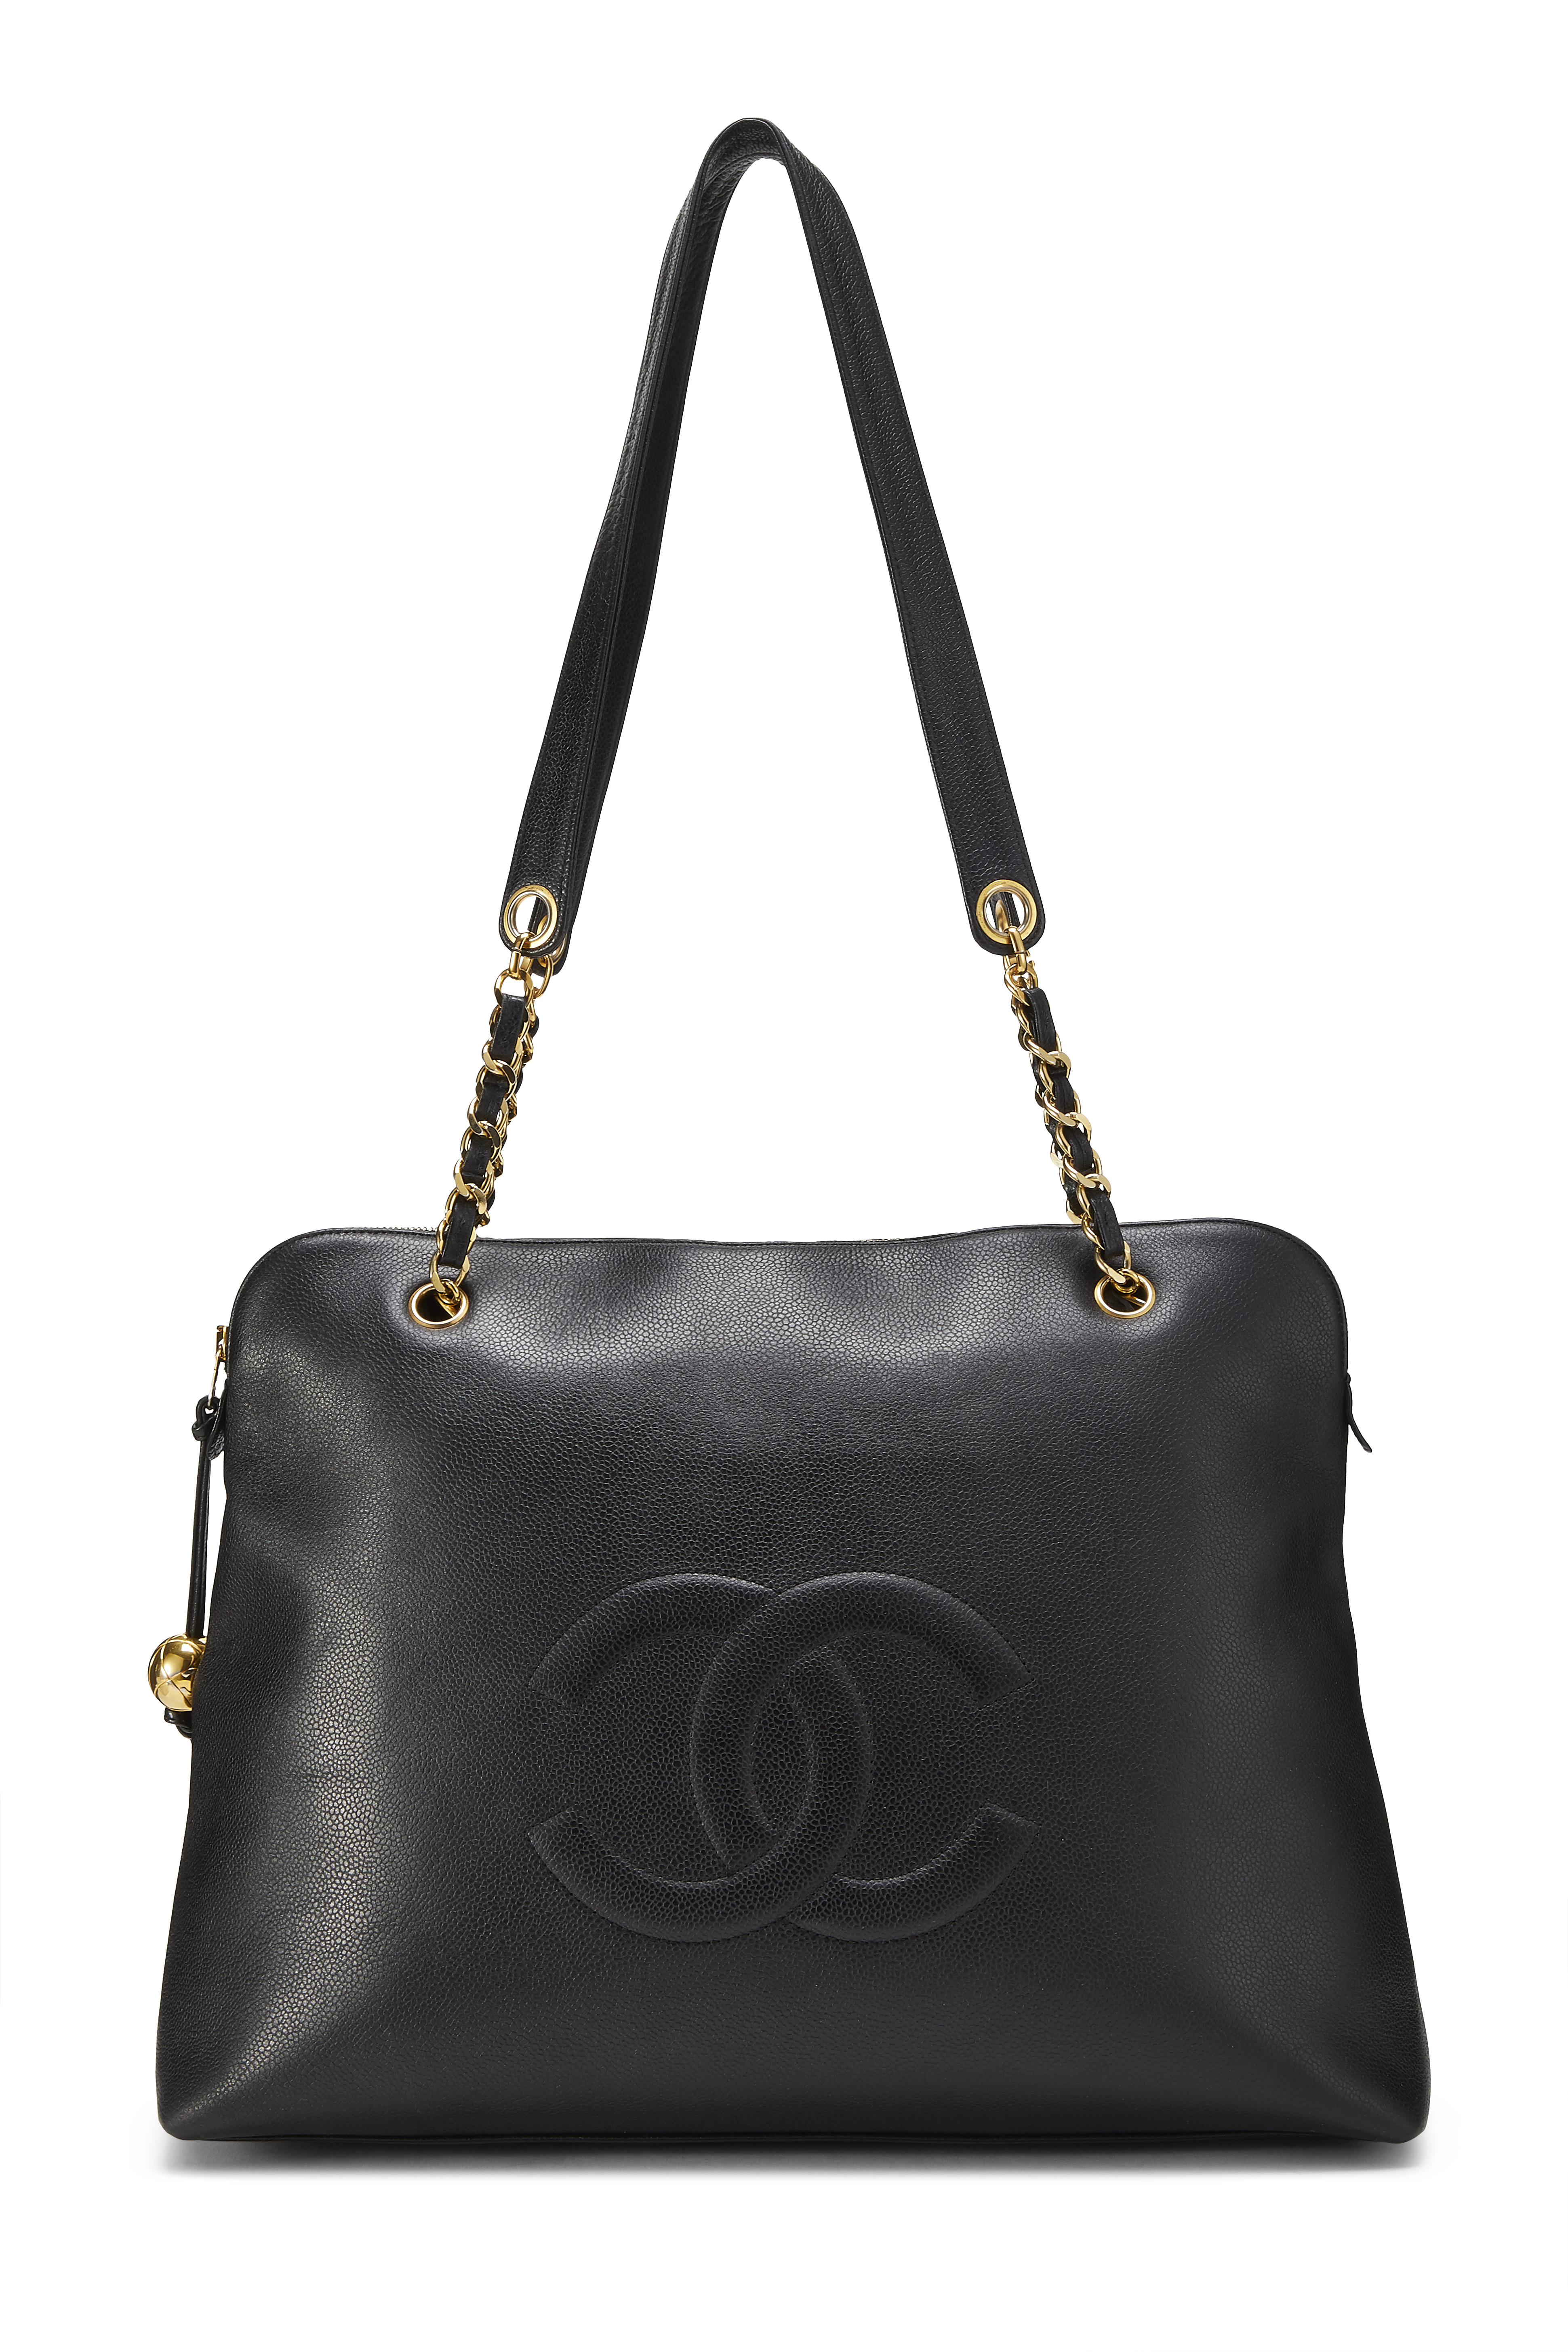 Chanel Black Caviar 'CC' Shoulder Bag Q6B0590FKB060